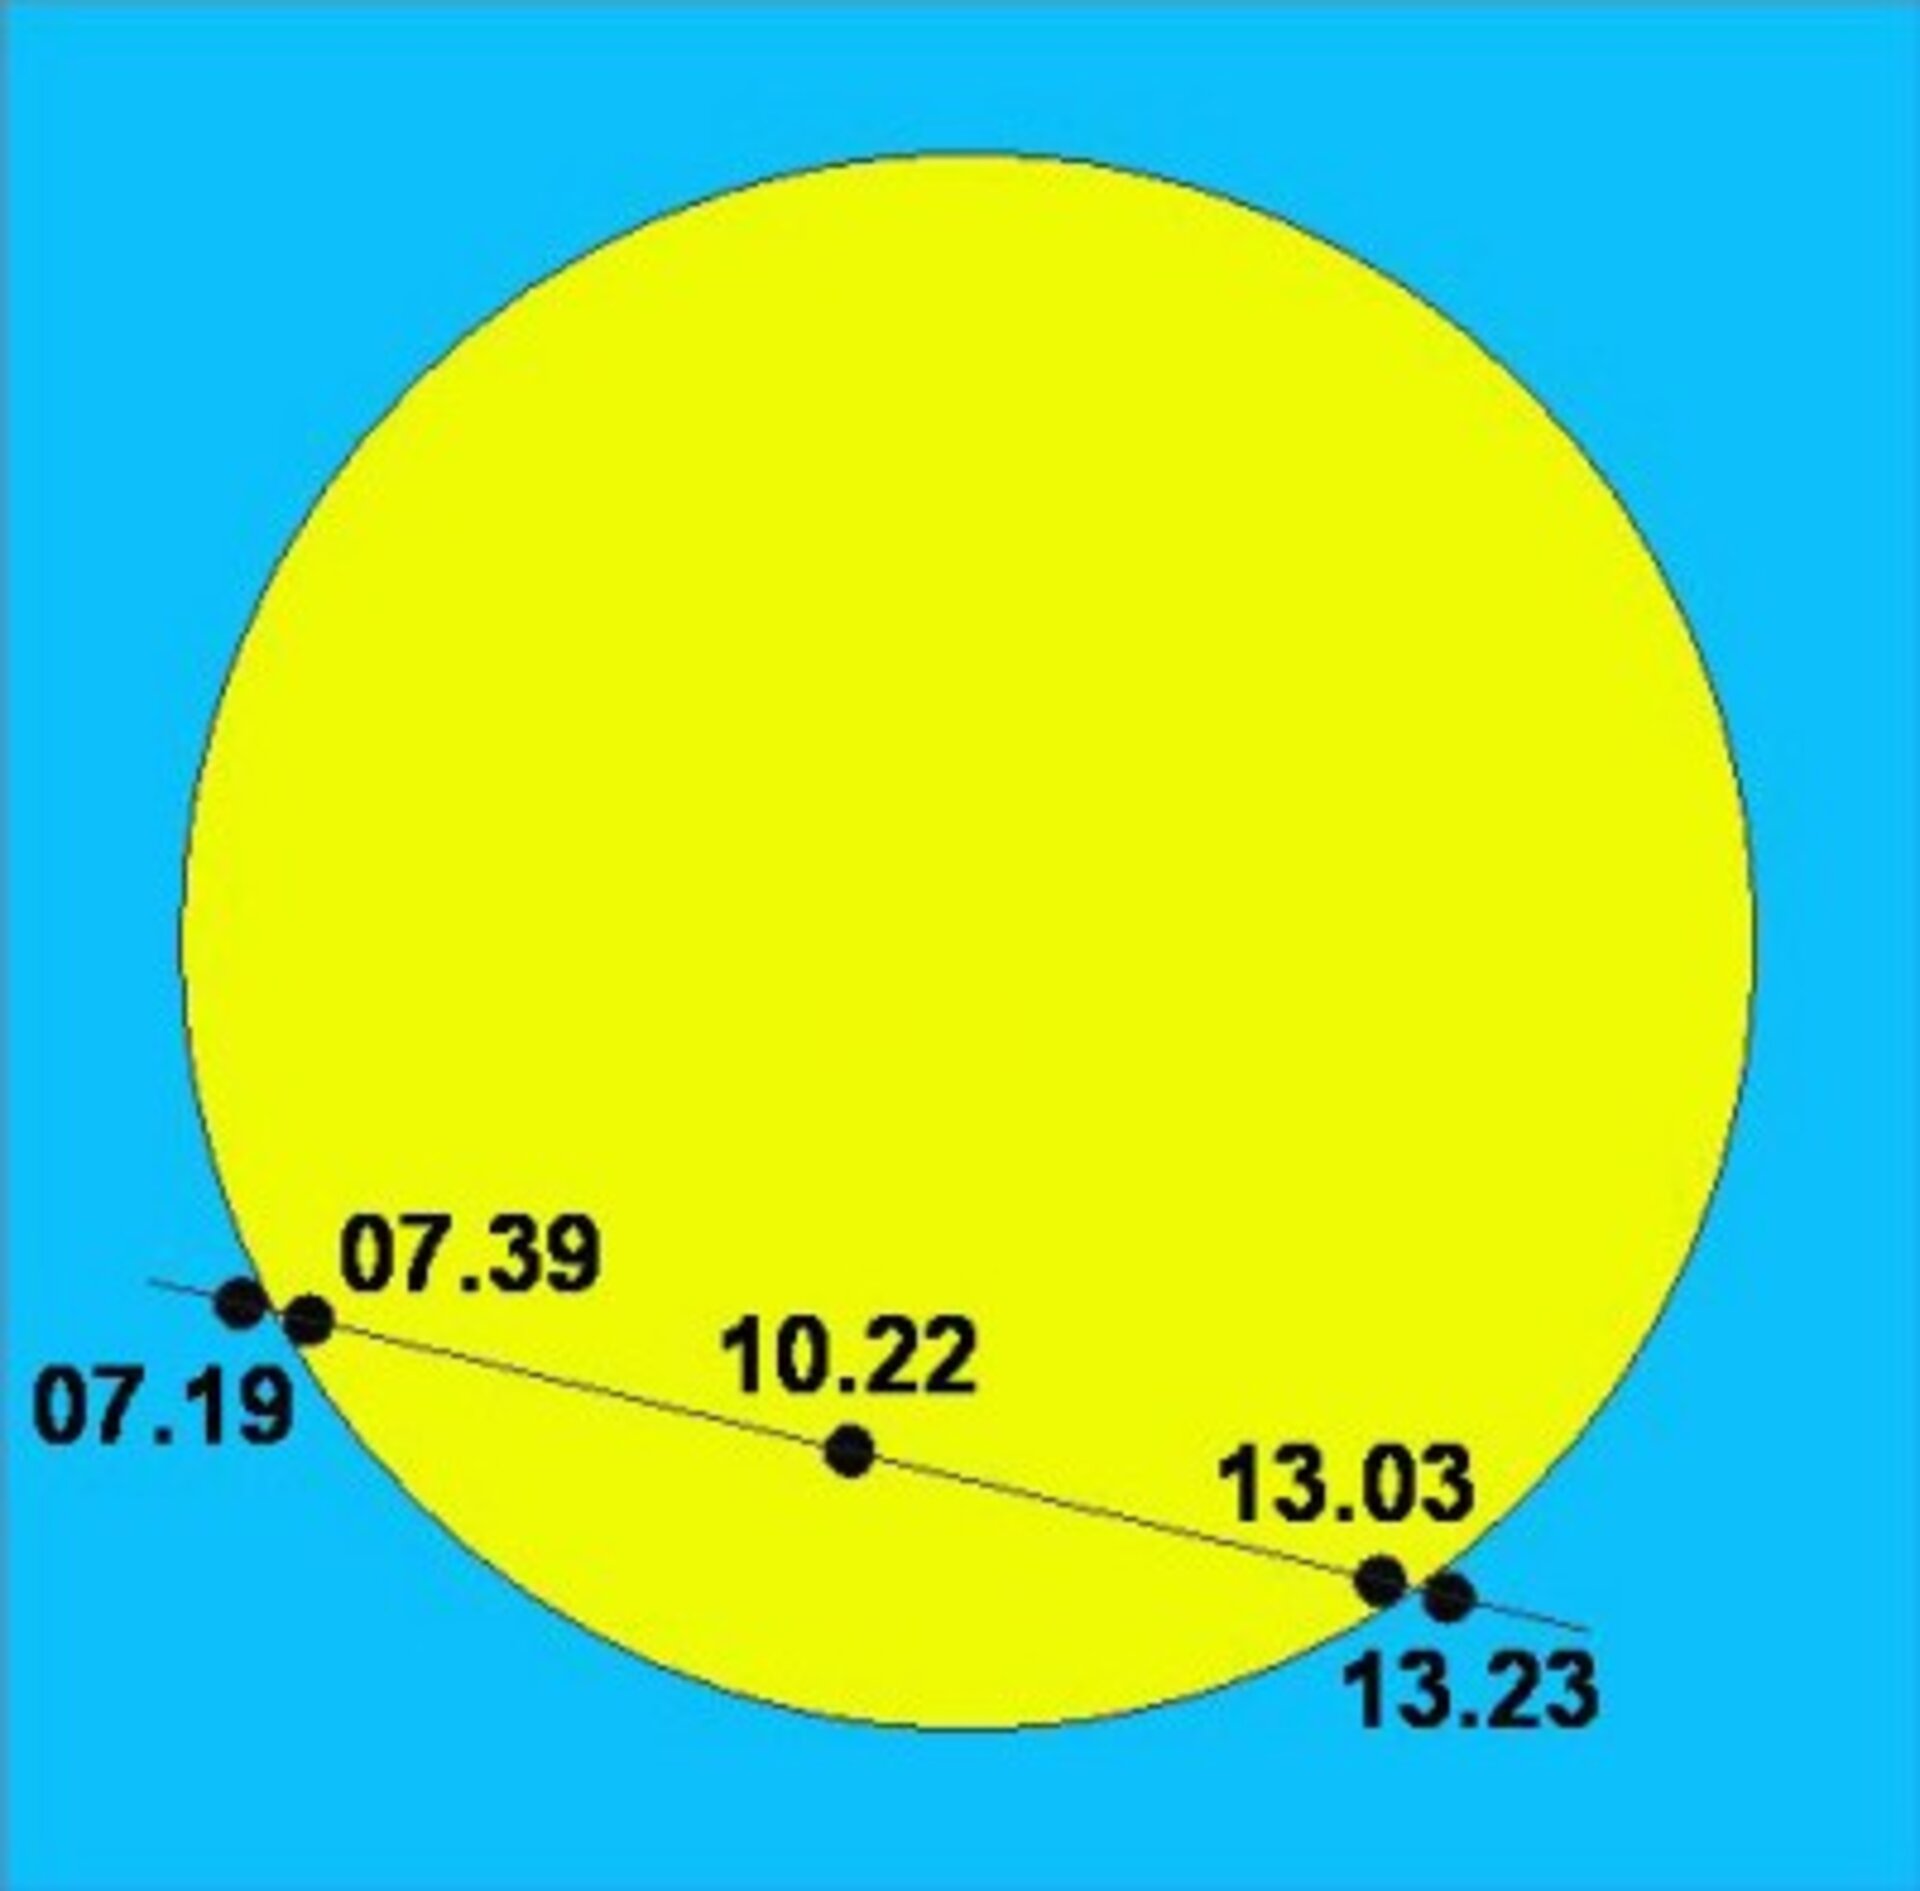 The movement of Venus across the Sun on 8 June 2004